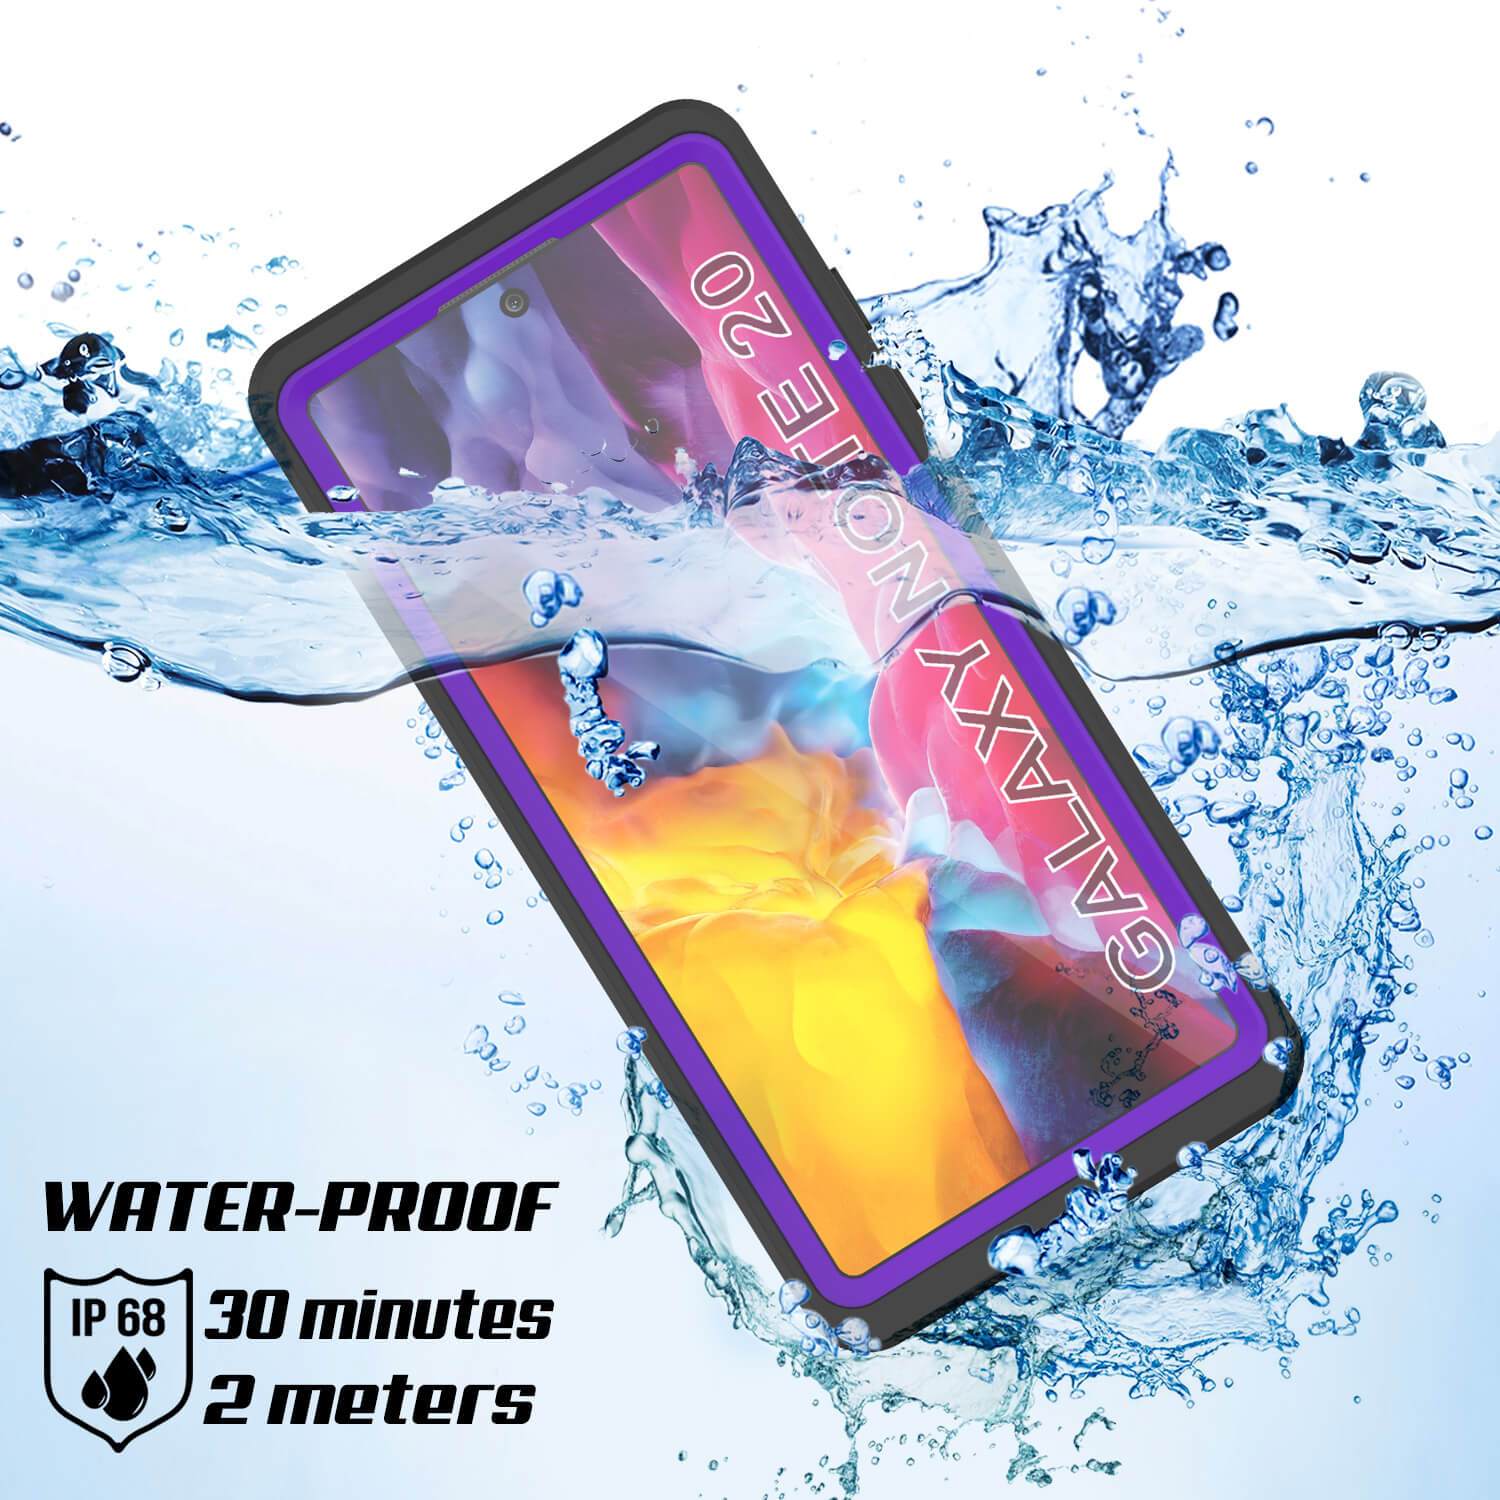 Galaxy Note 20 Waterproof Case, Punkcase Studstar Purple Series Thin Armor Cover